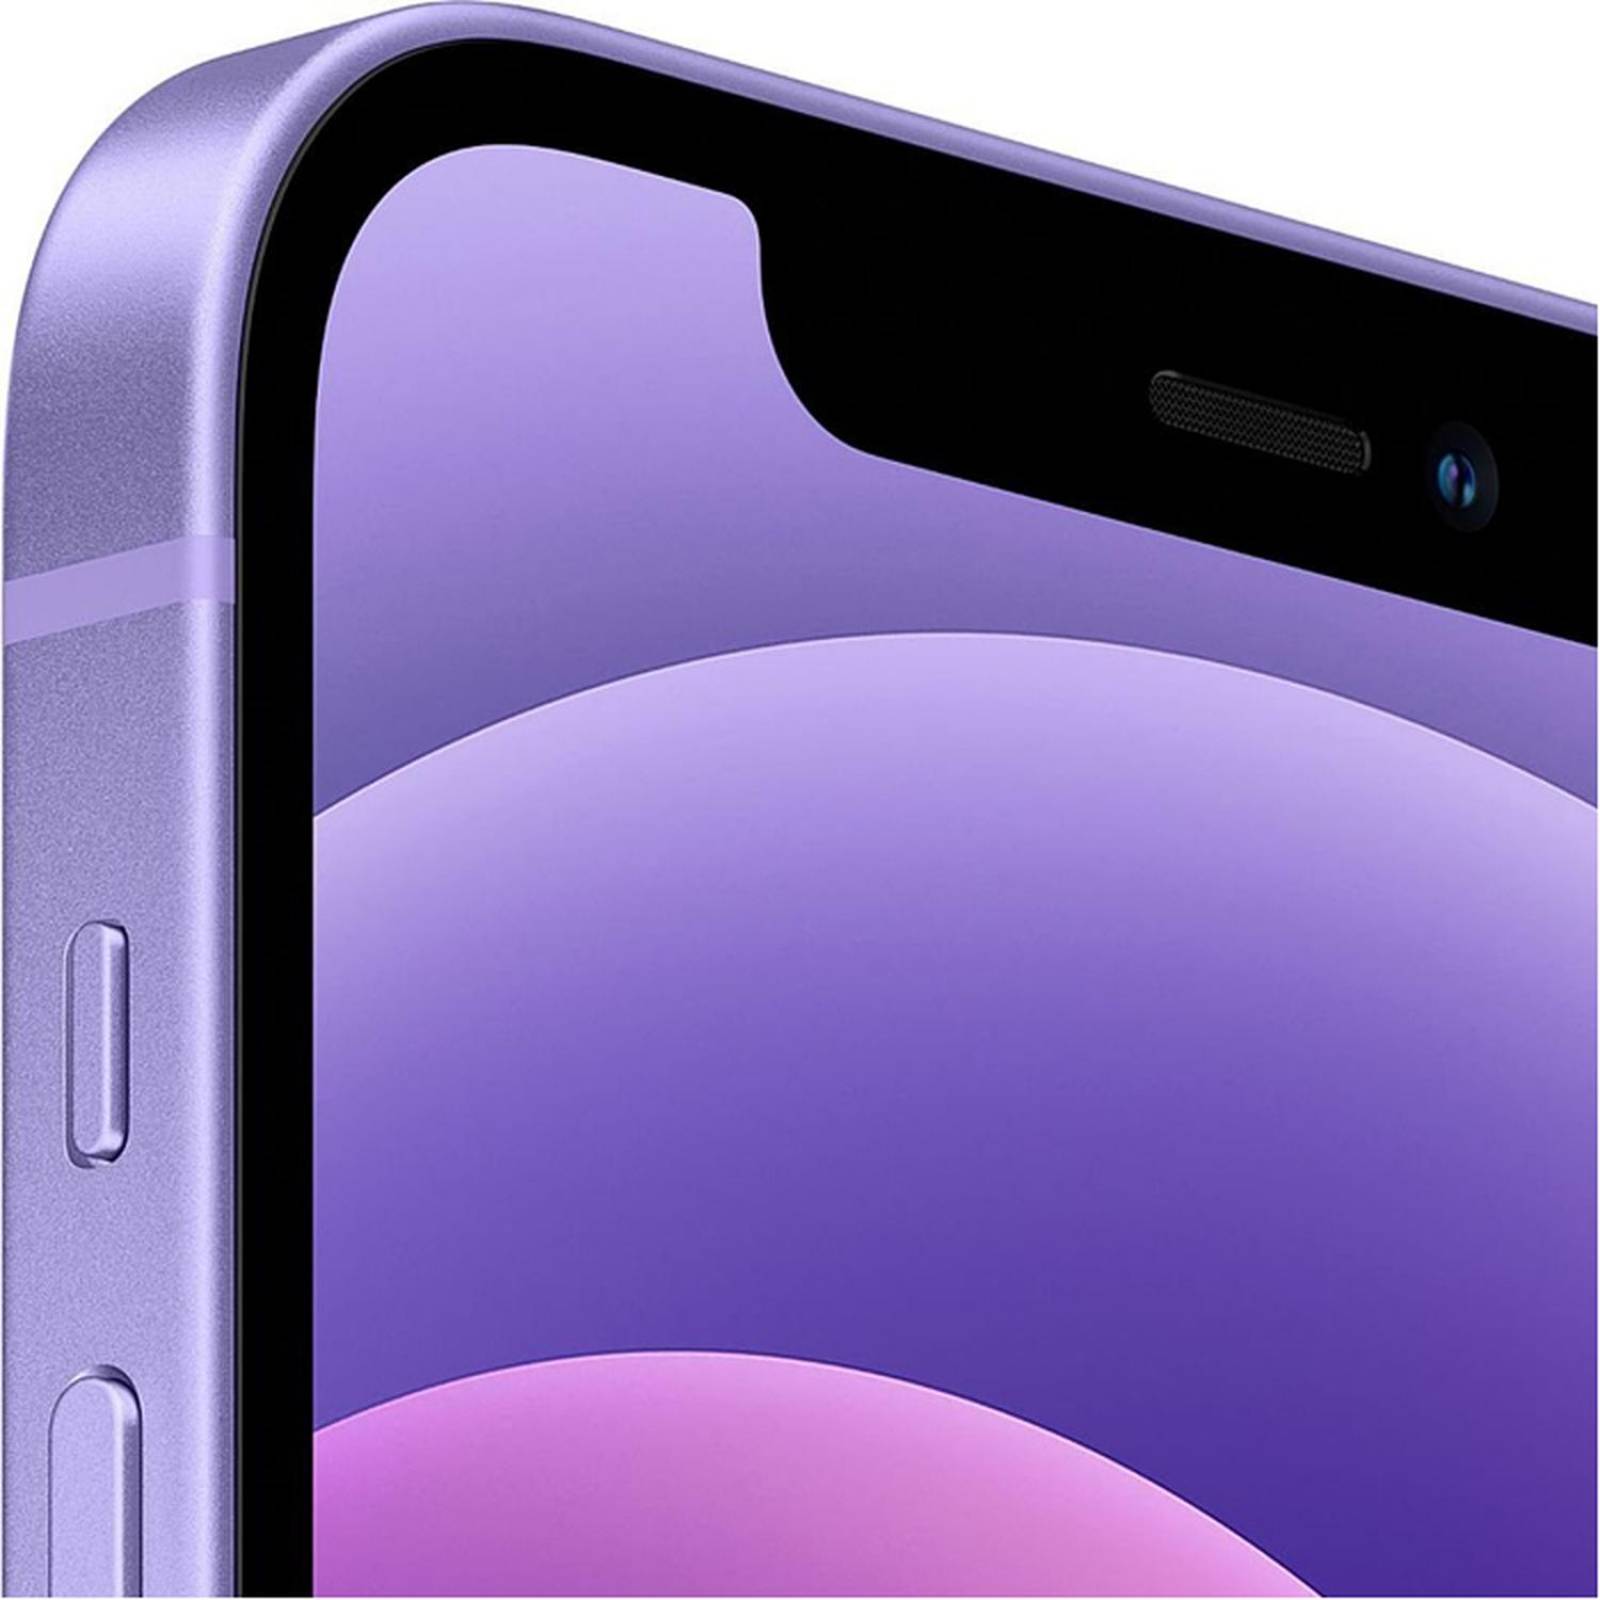  Apple - iPhone 12, 64GB, púrpura, desbloqueado (reacondicionado  prémium) : Celulares y Accesorios